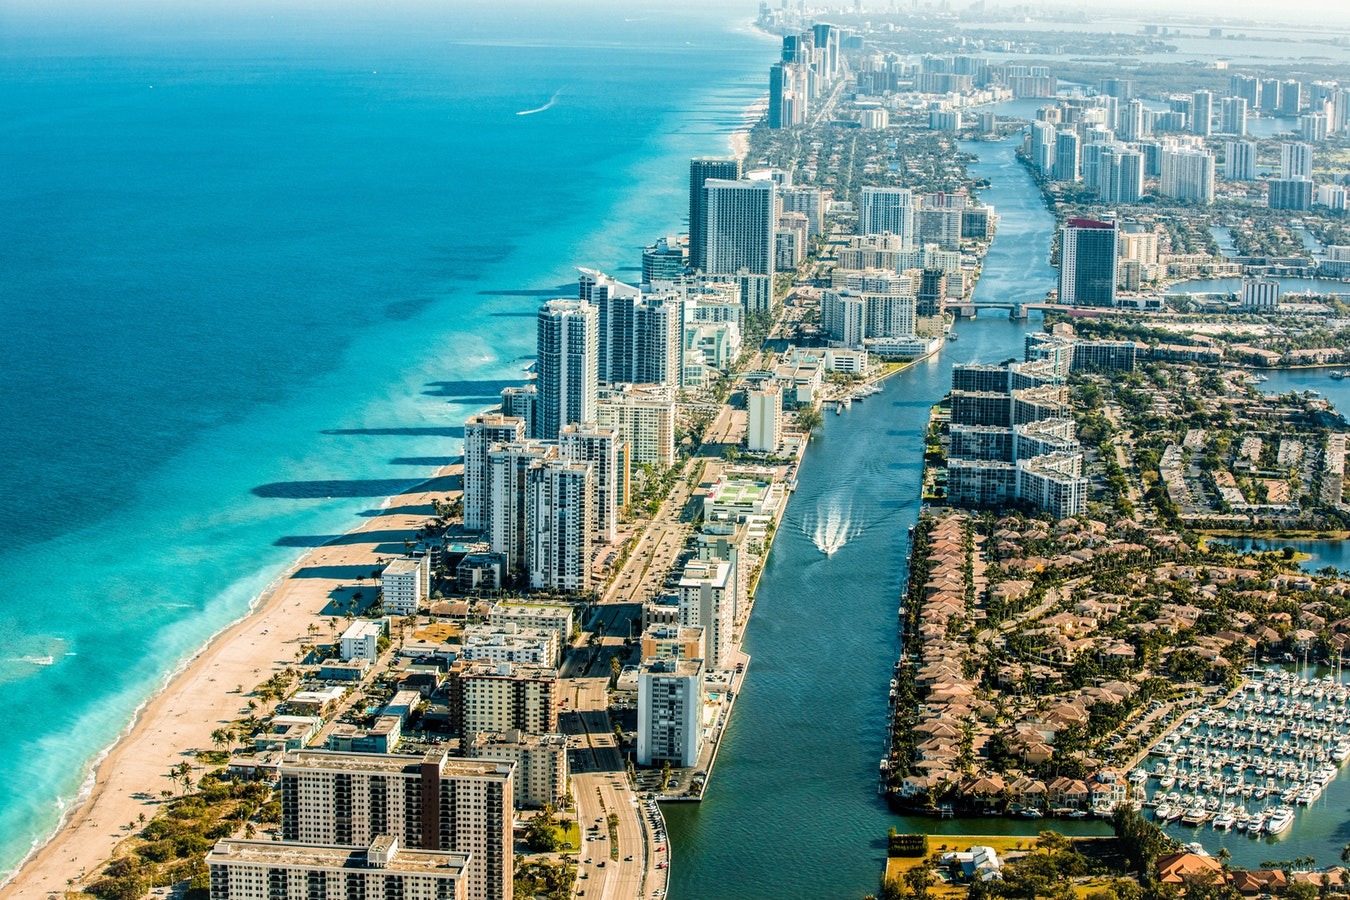 30 Fun Things To Do In Miami Florida - The Magic City!